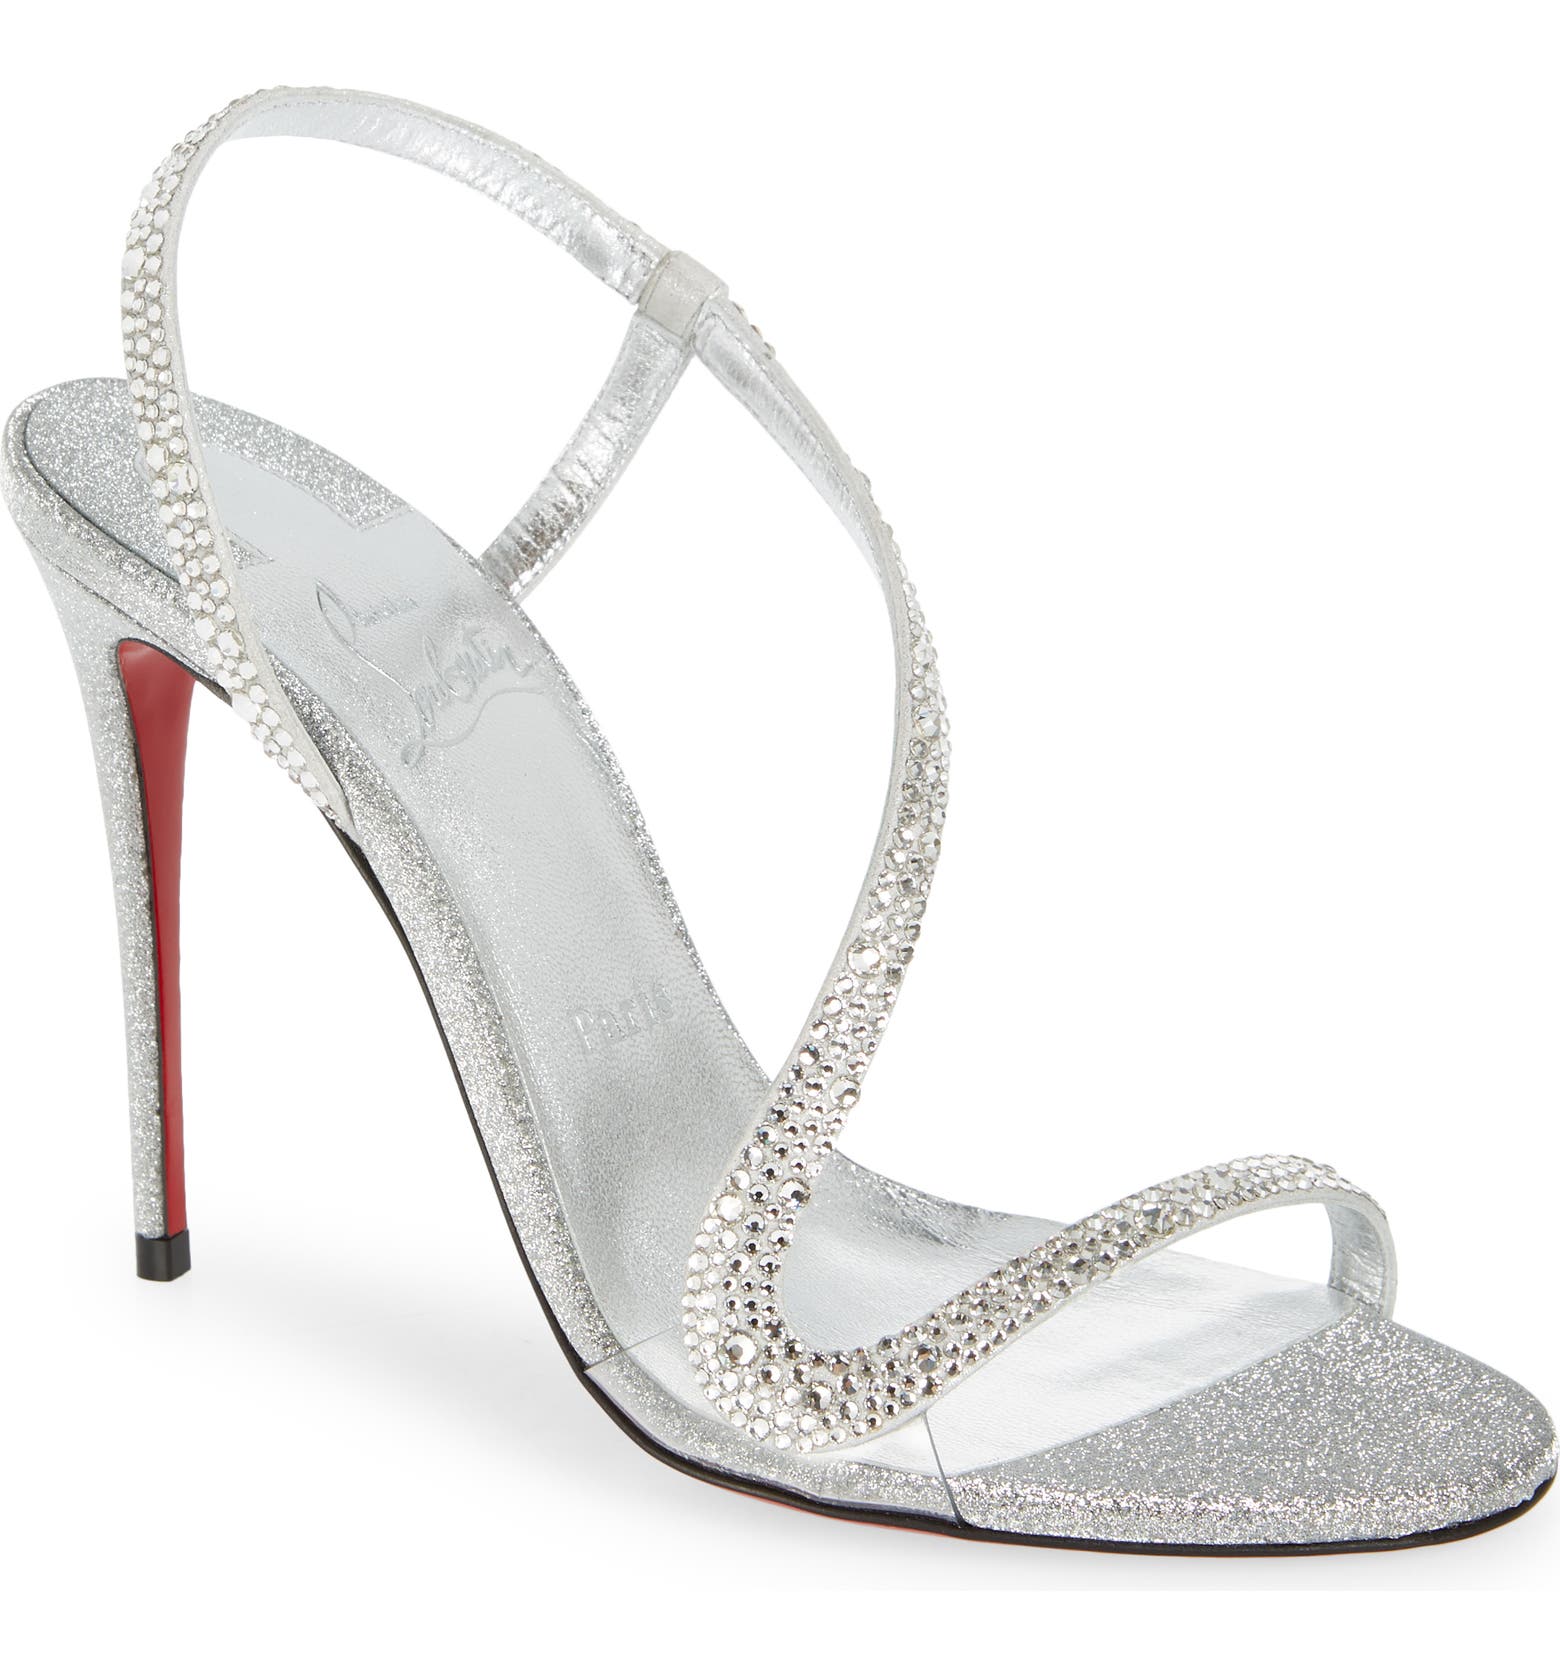 Silver Louboutin heels with rhinestones